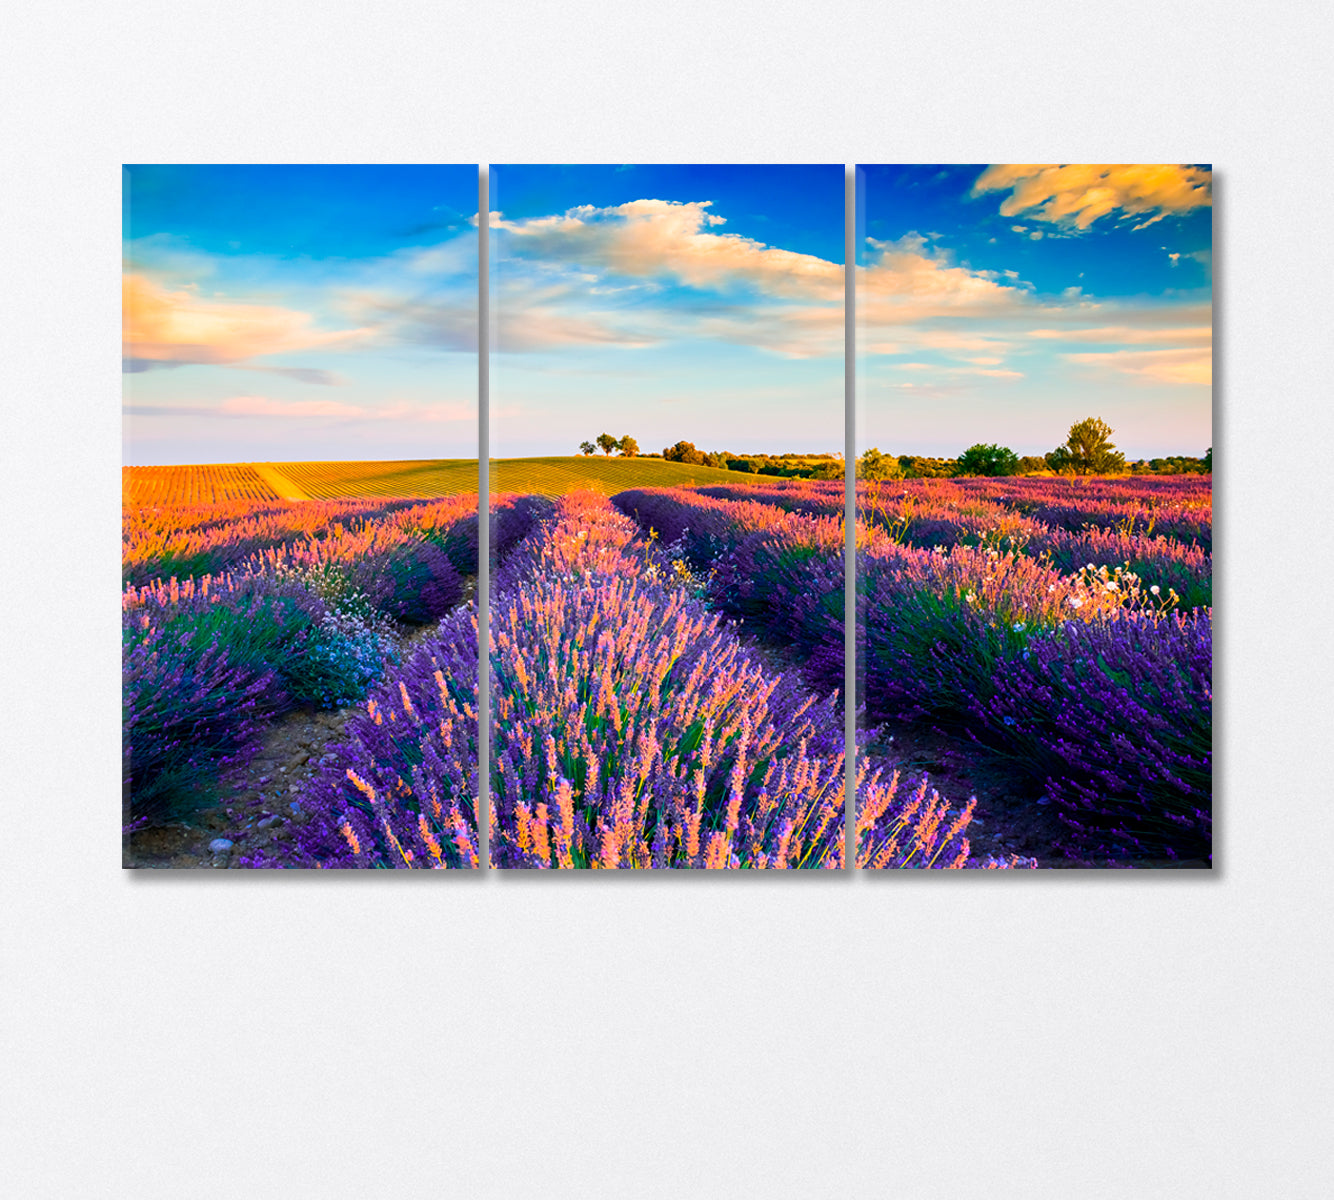 Lavender Field and Provence Hills Canvas Print-Canvas Print-CetArt-3 Panels-36x24 inches-CetArt